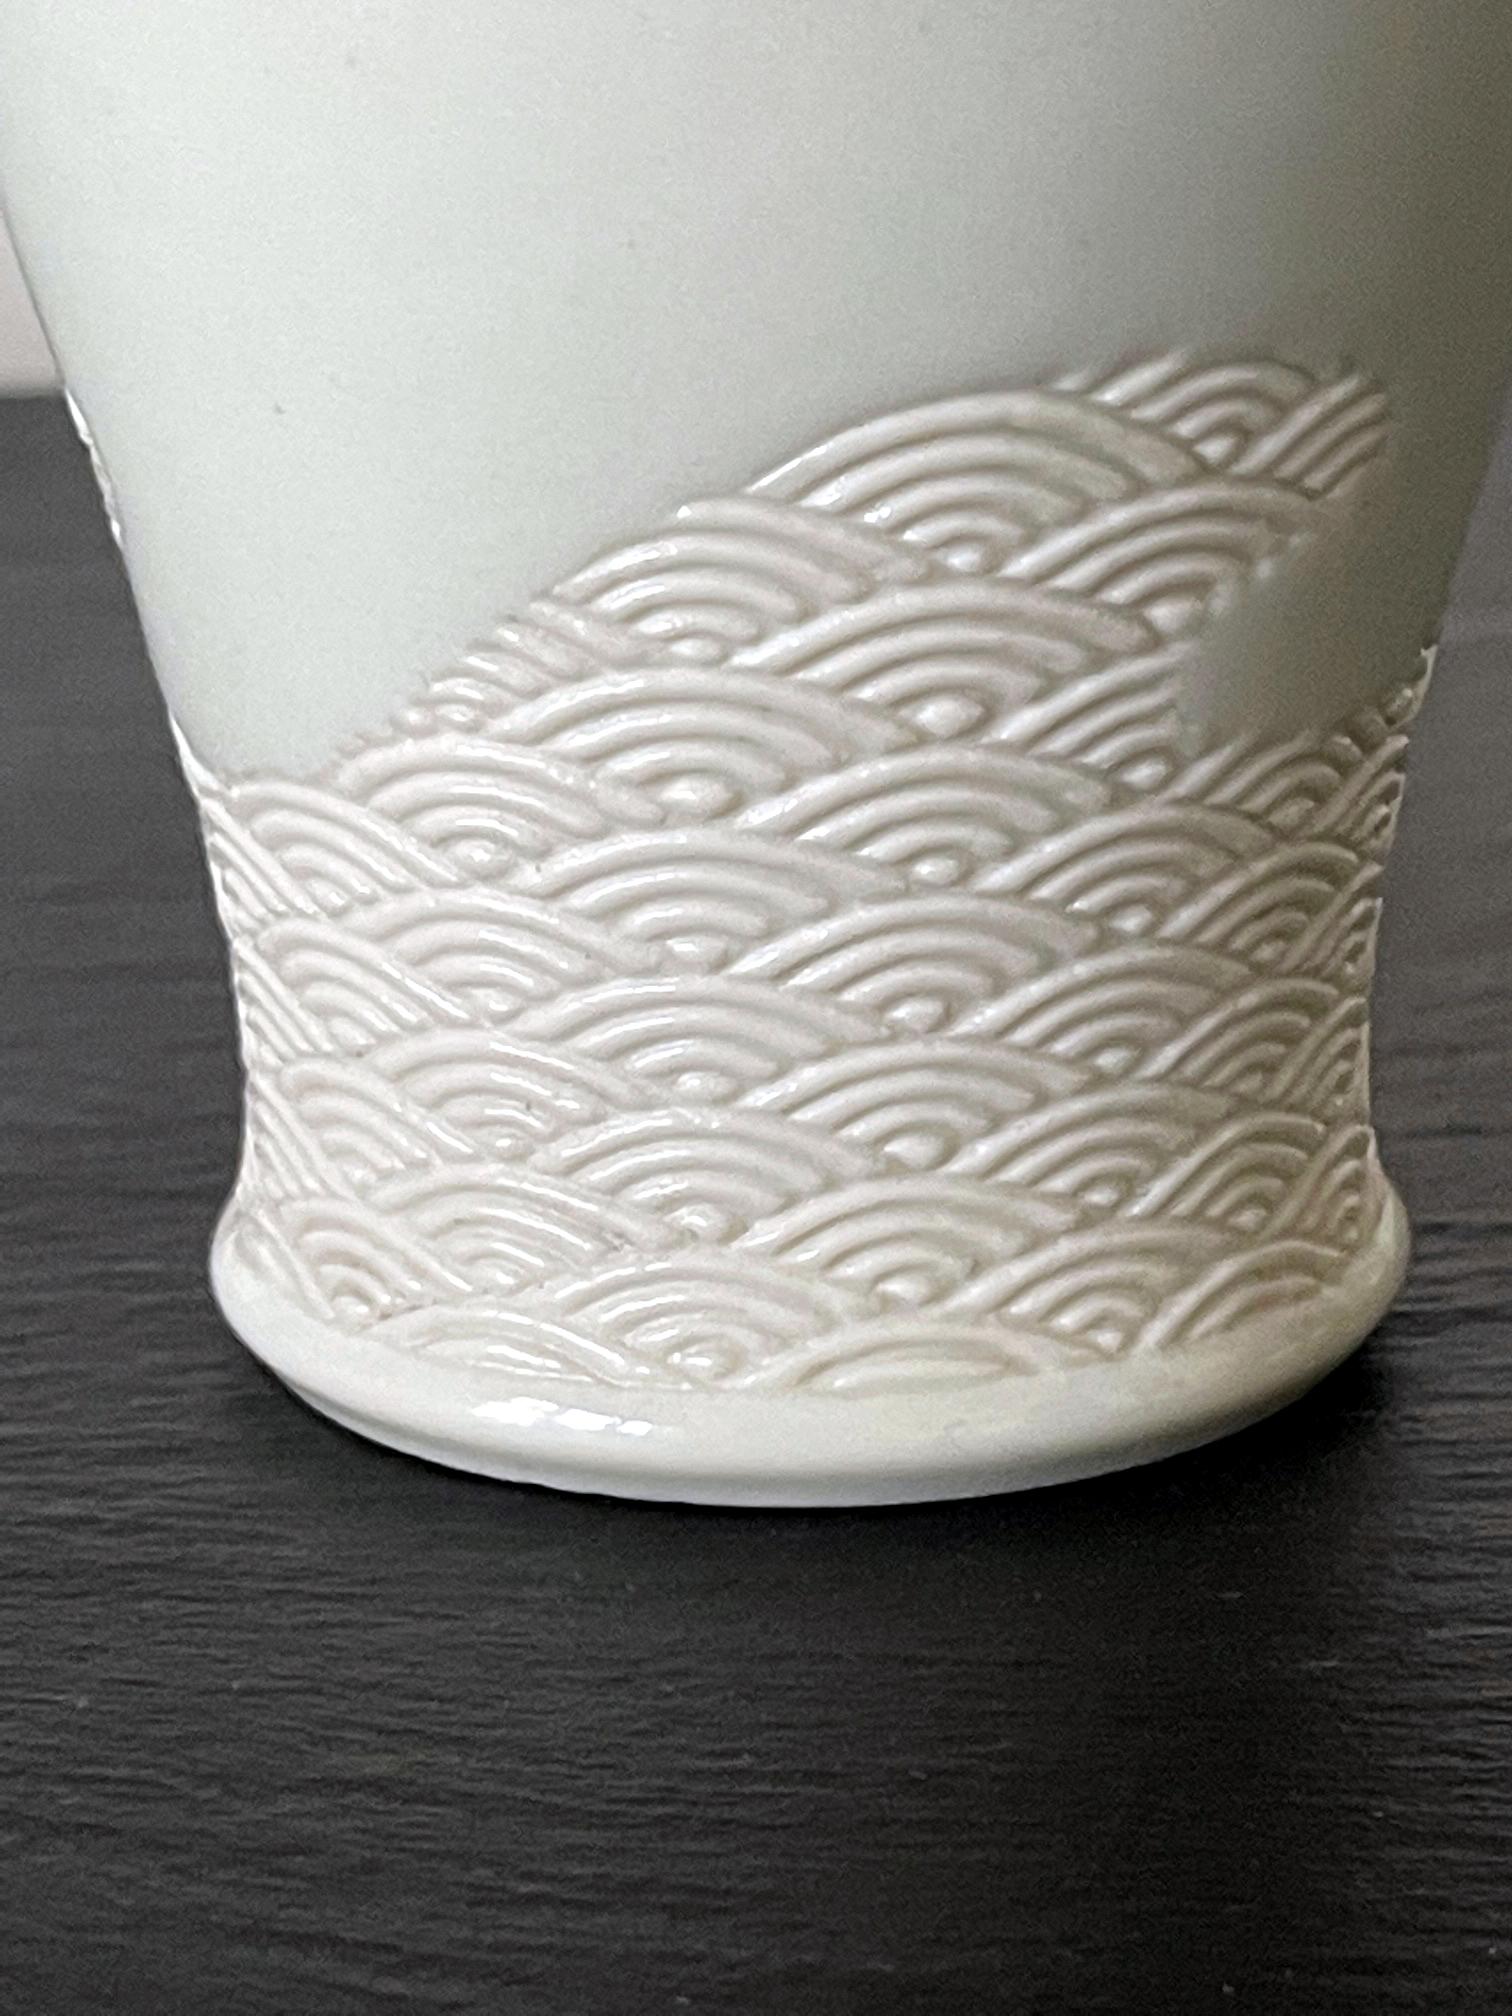 Japanese Ceramic Vase with Delicate Carvings by Makuzu Kozan Meiji Period For Sale 9